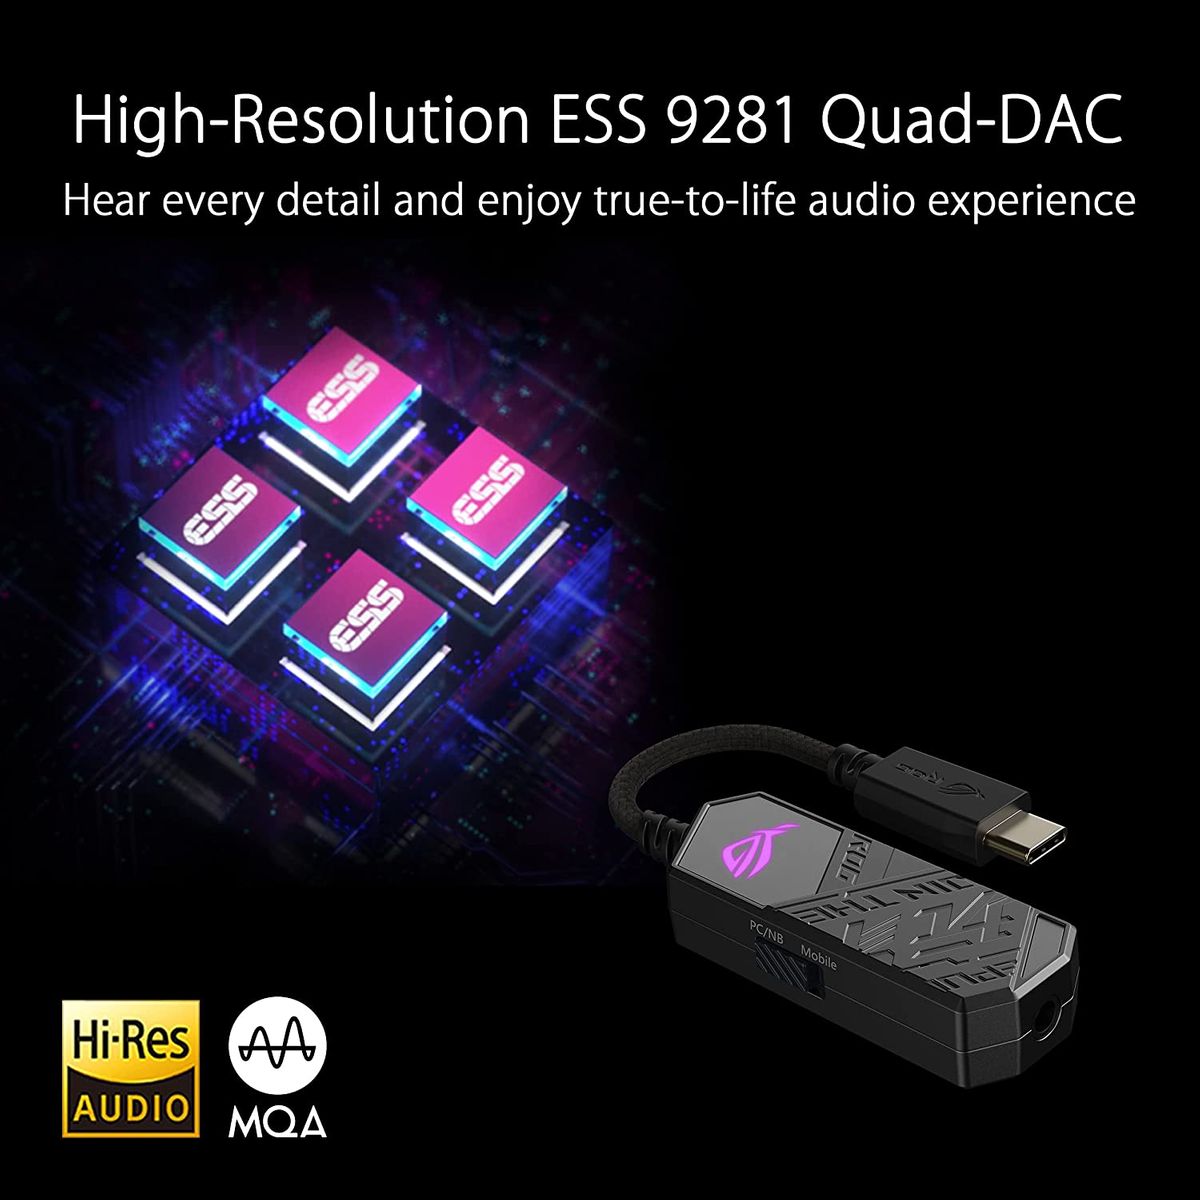 ASUS ROG Clavis USB-C Gaming DAC (ESS 9281 Quad DAC Amplifier, AI Noise Canceling Microphone, MQA Rendering, Aura Sync RGB